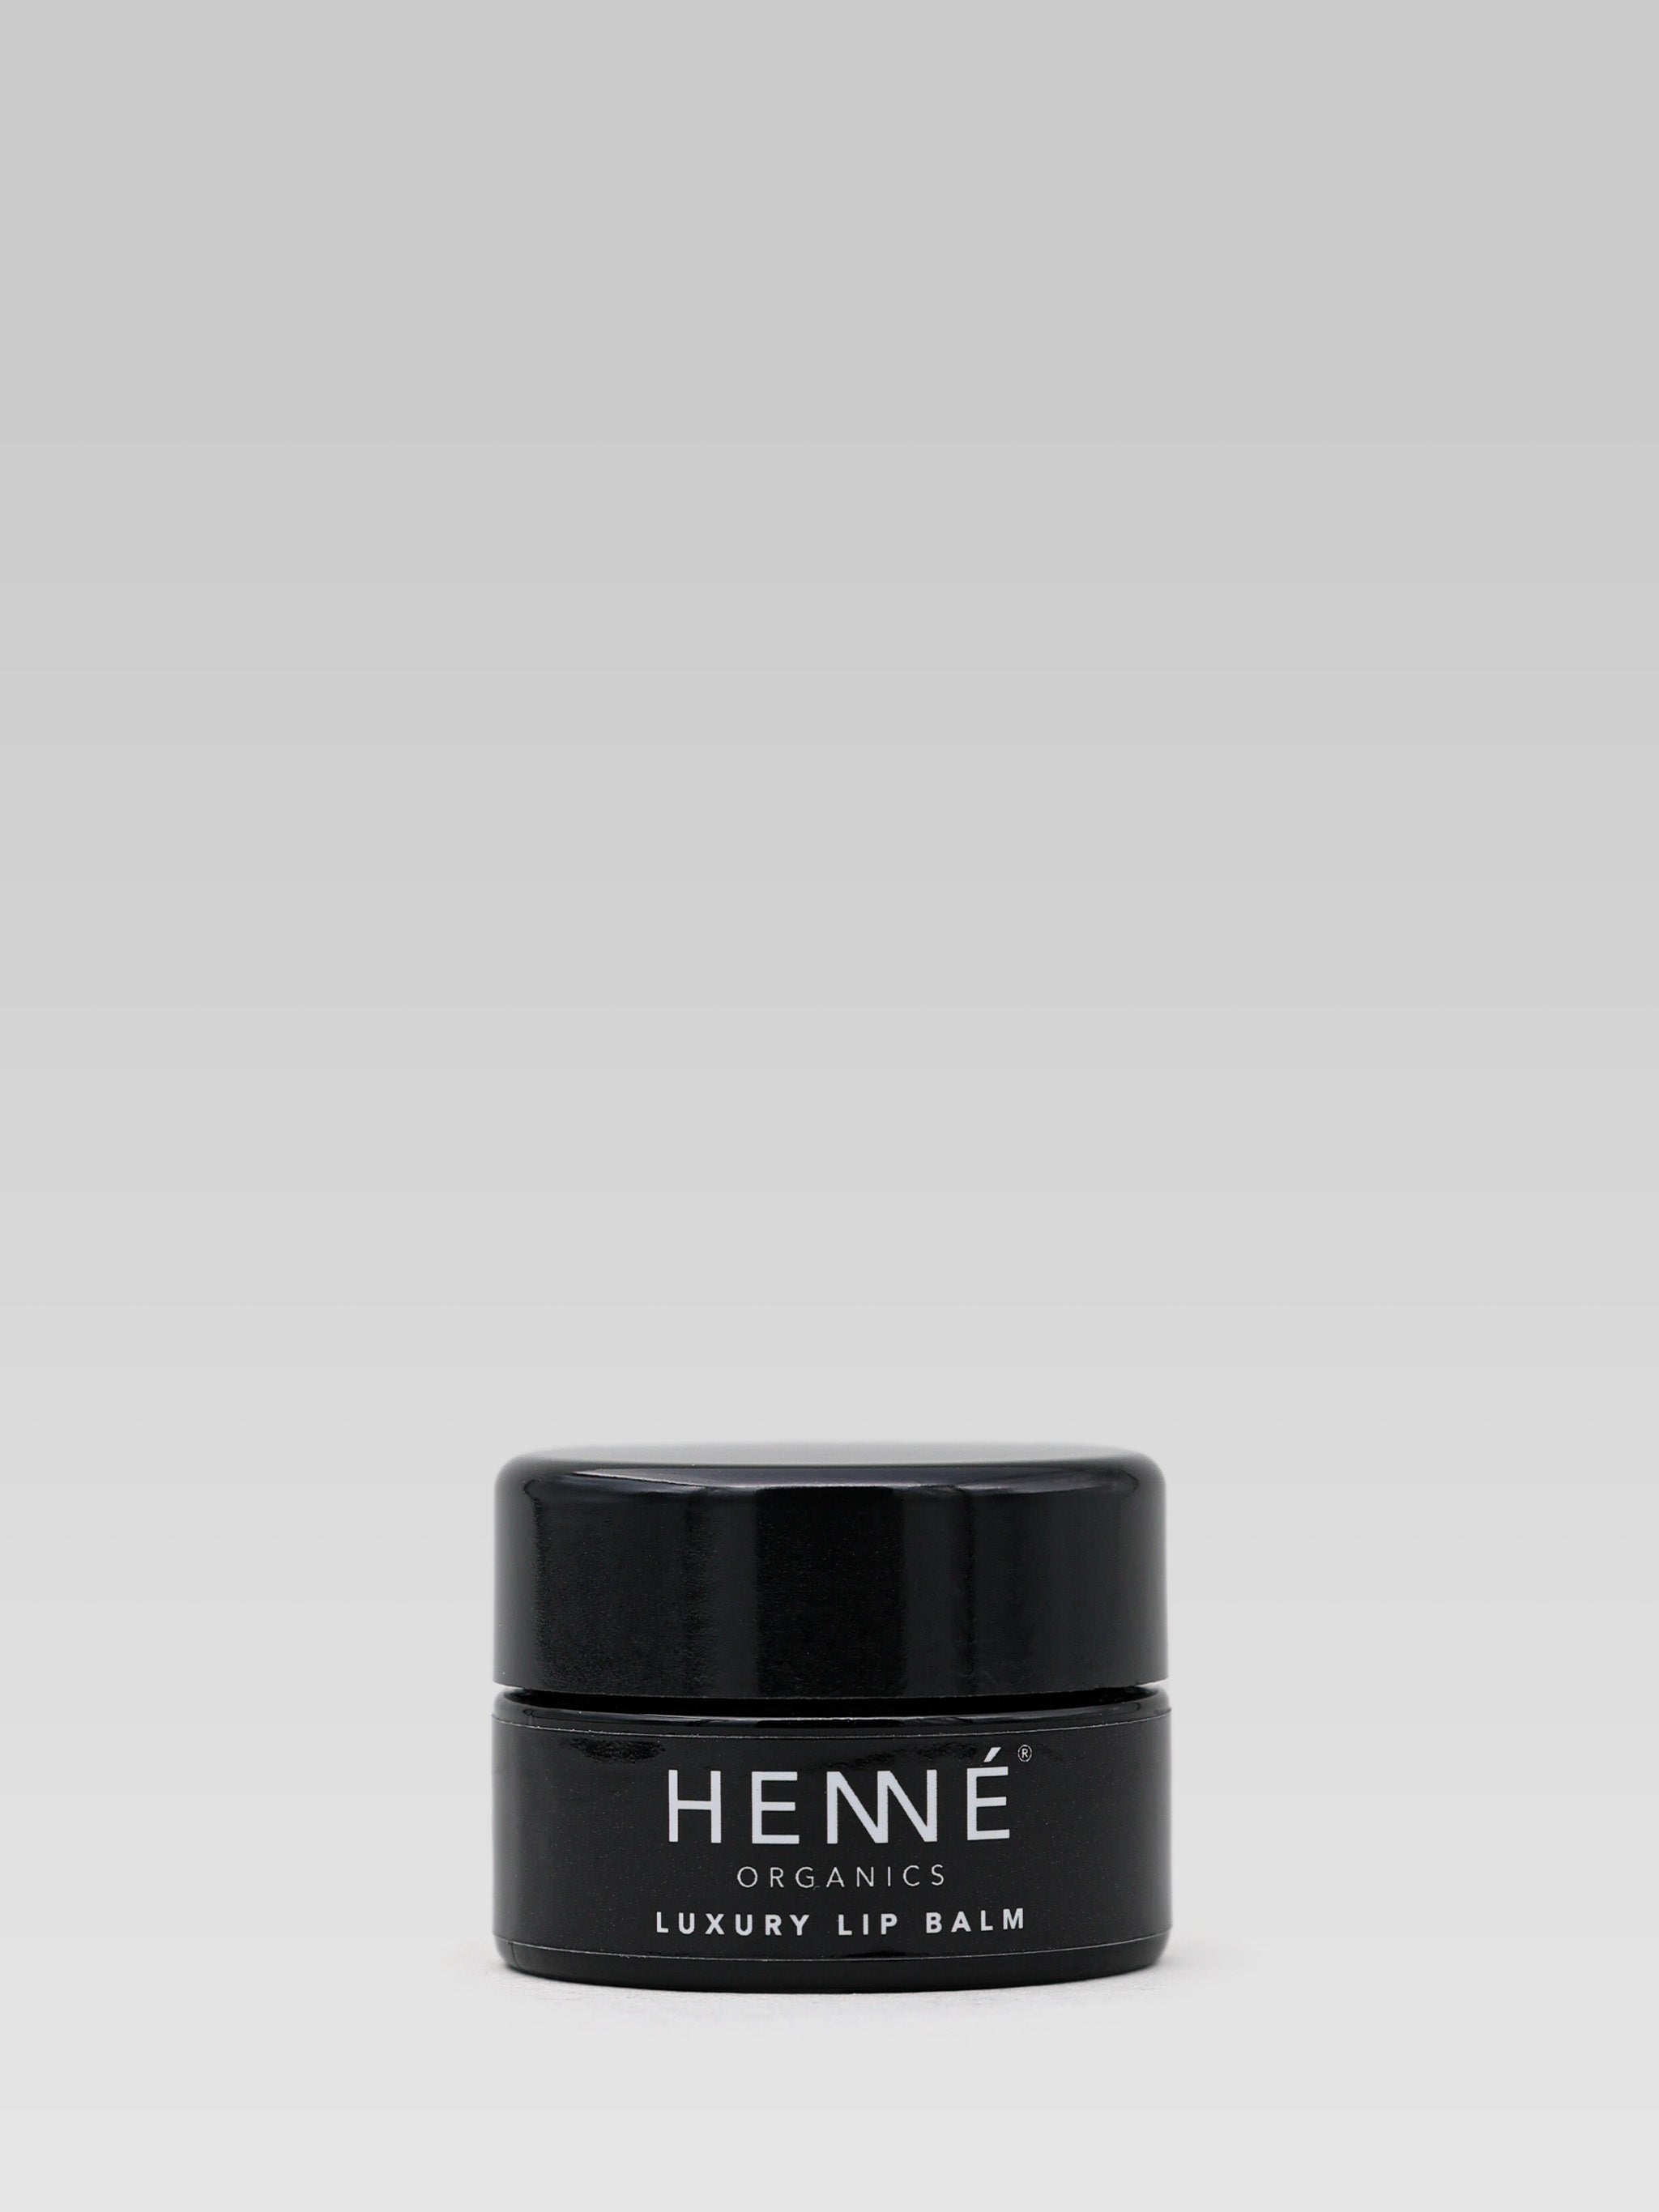 Henne Organics Luxury Lip Balm product shot